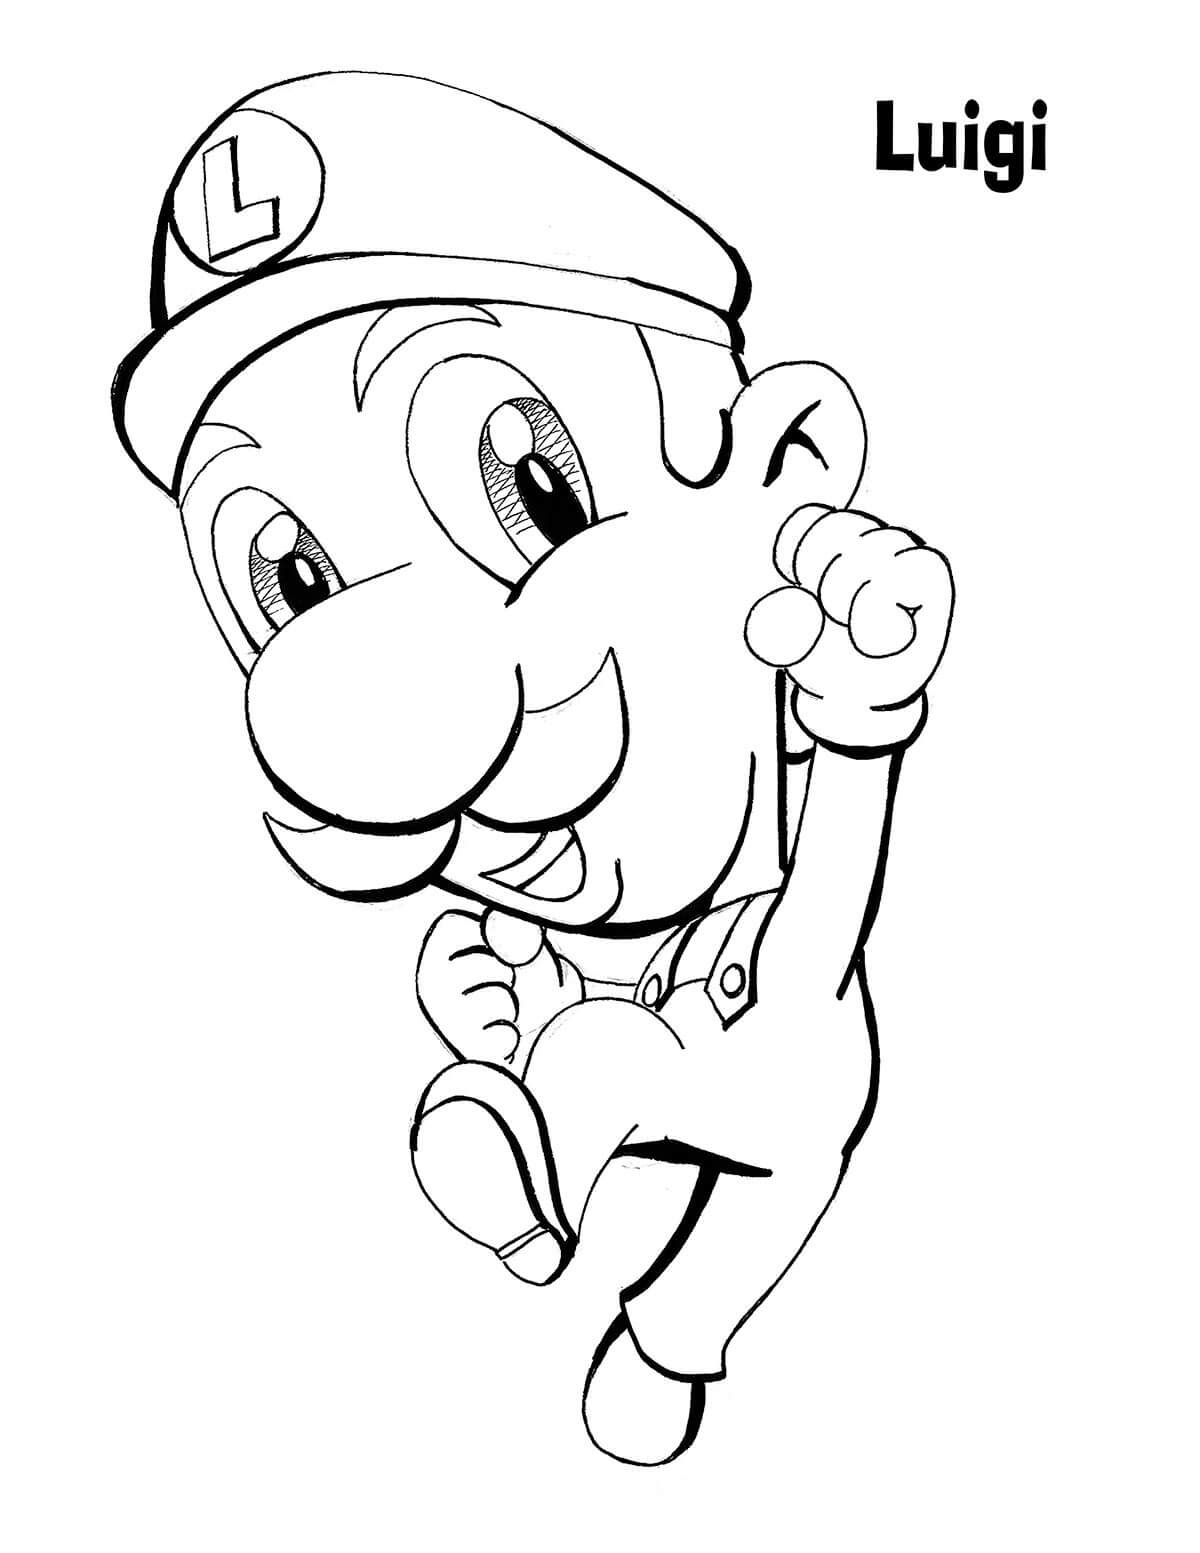 Divertido Luigi Saltando para colorir